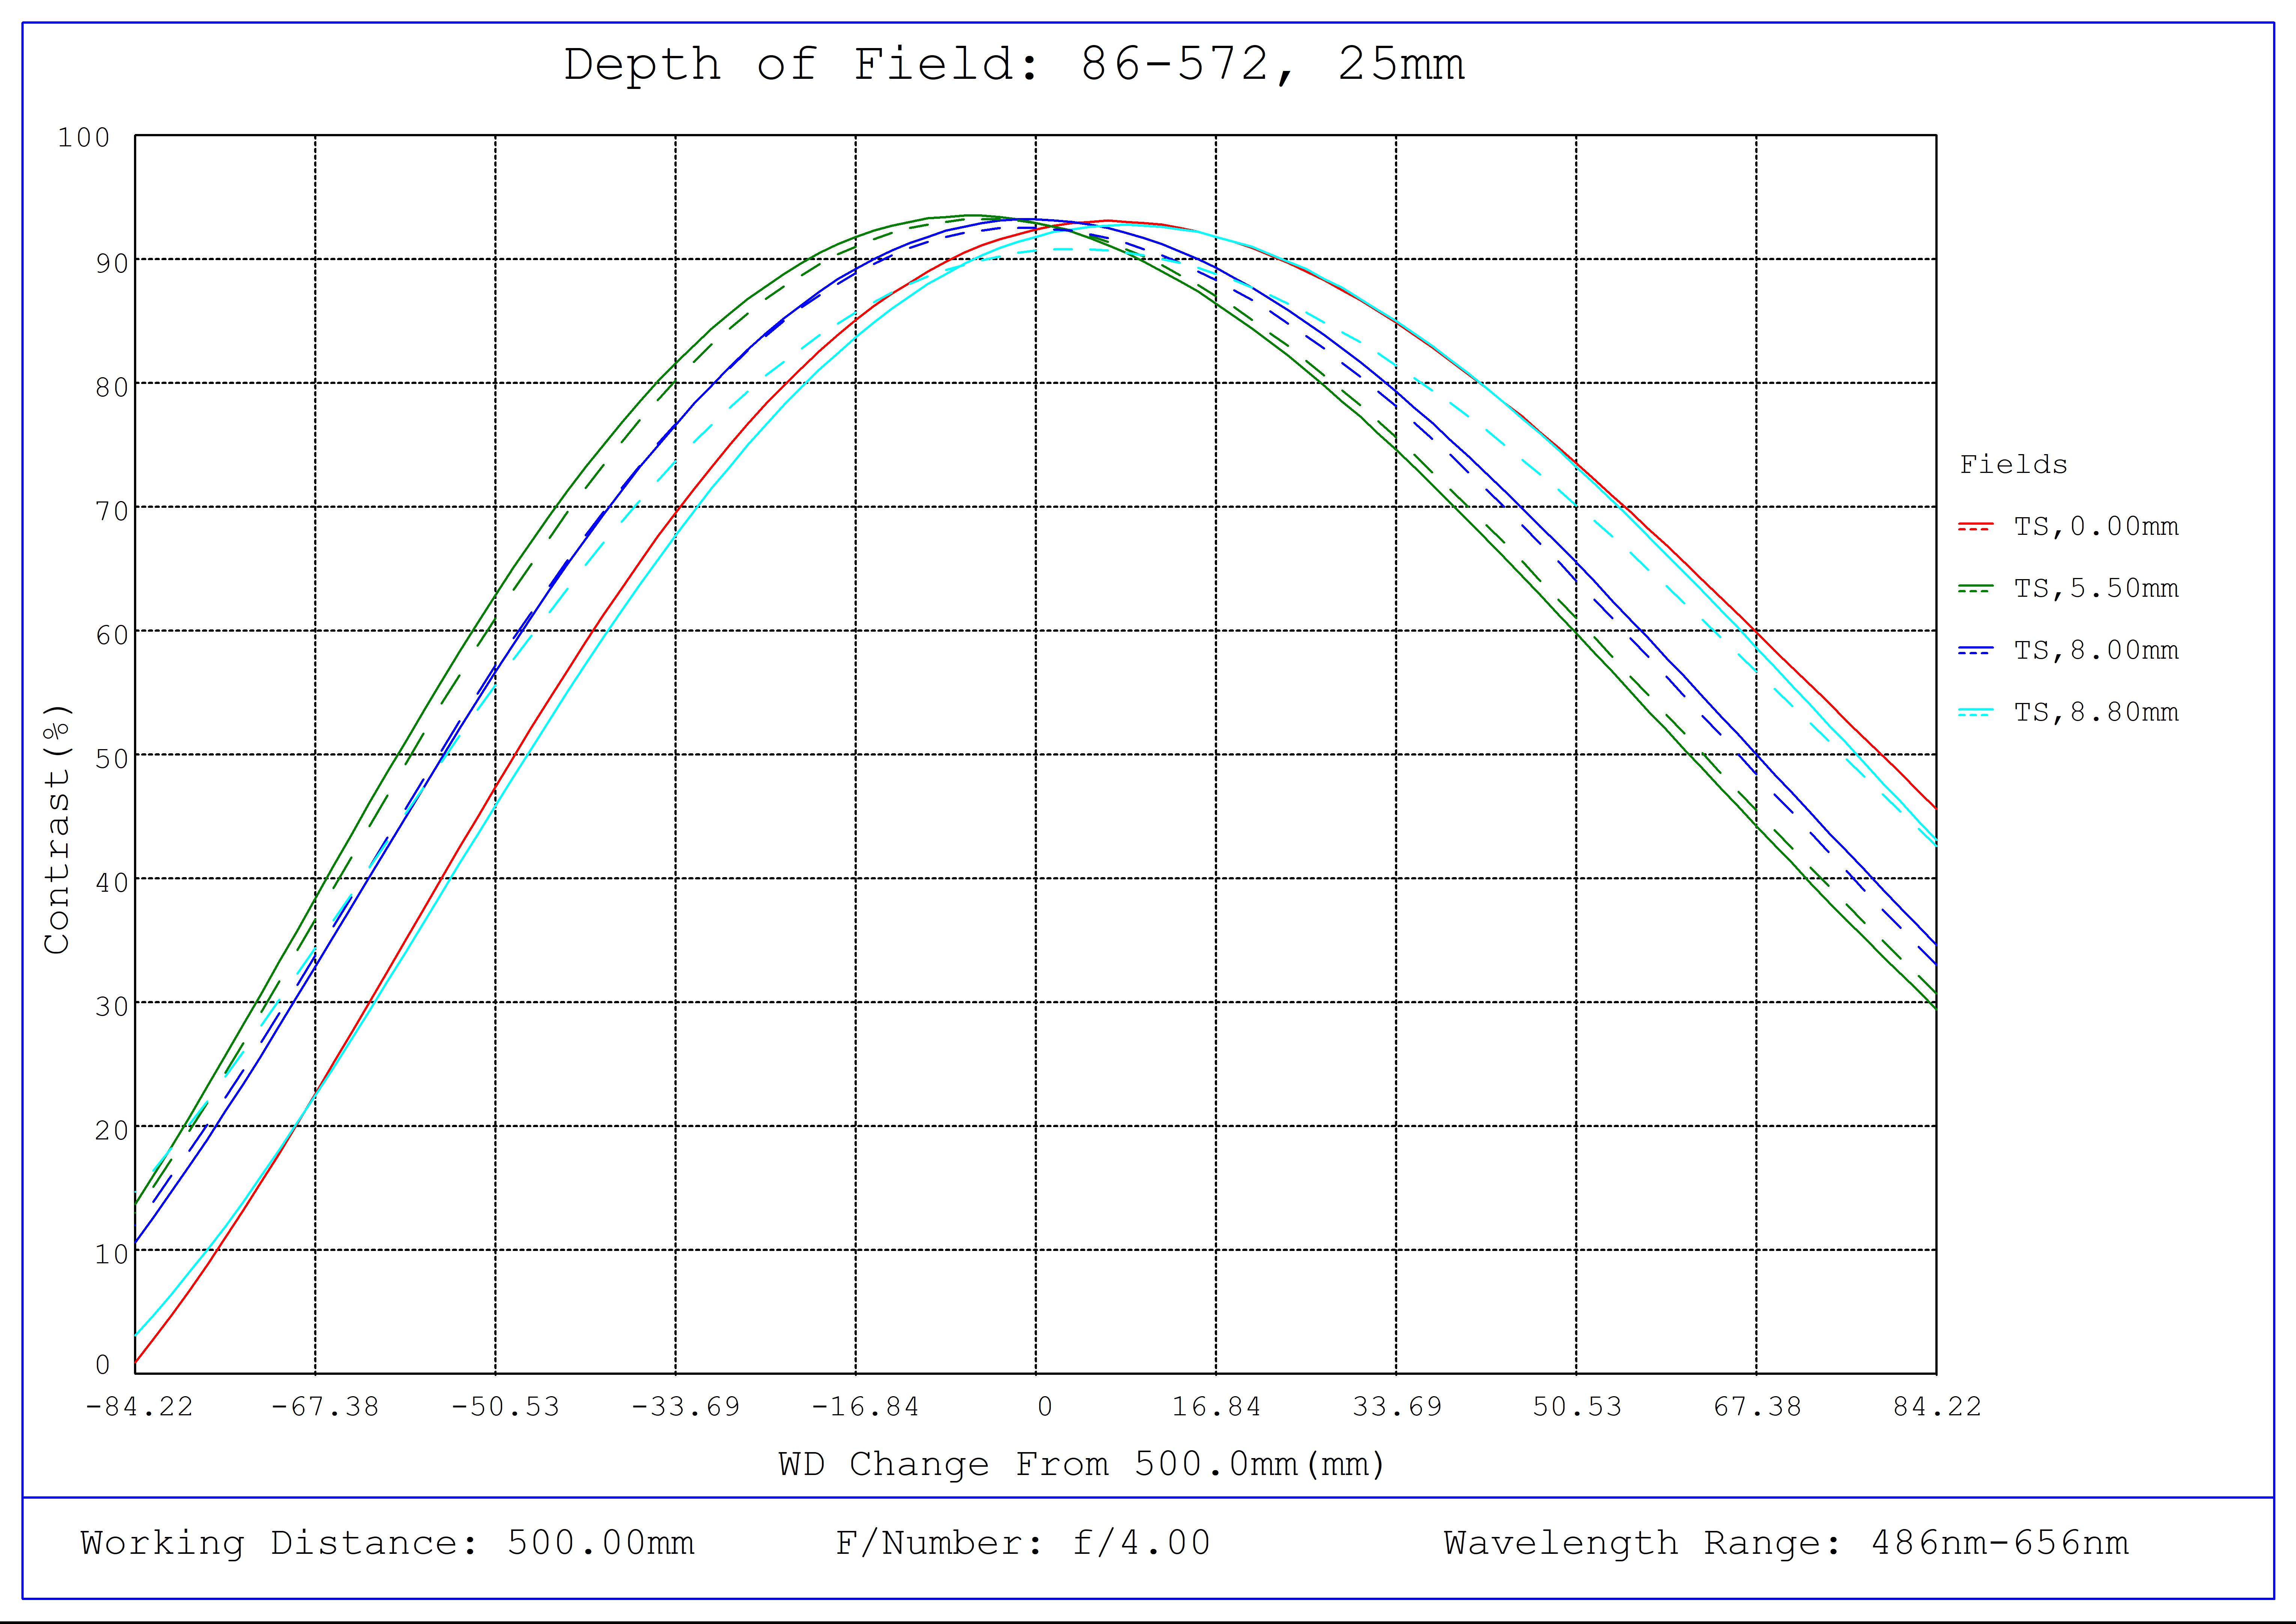 #86-572, 25mm Focal Length, HP Series Fixed Focal Length Lens, Depth of Field Plot, 500mm Working Distance, f4